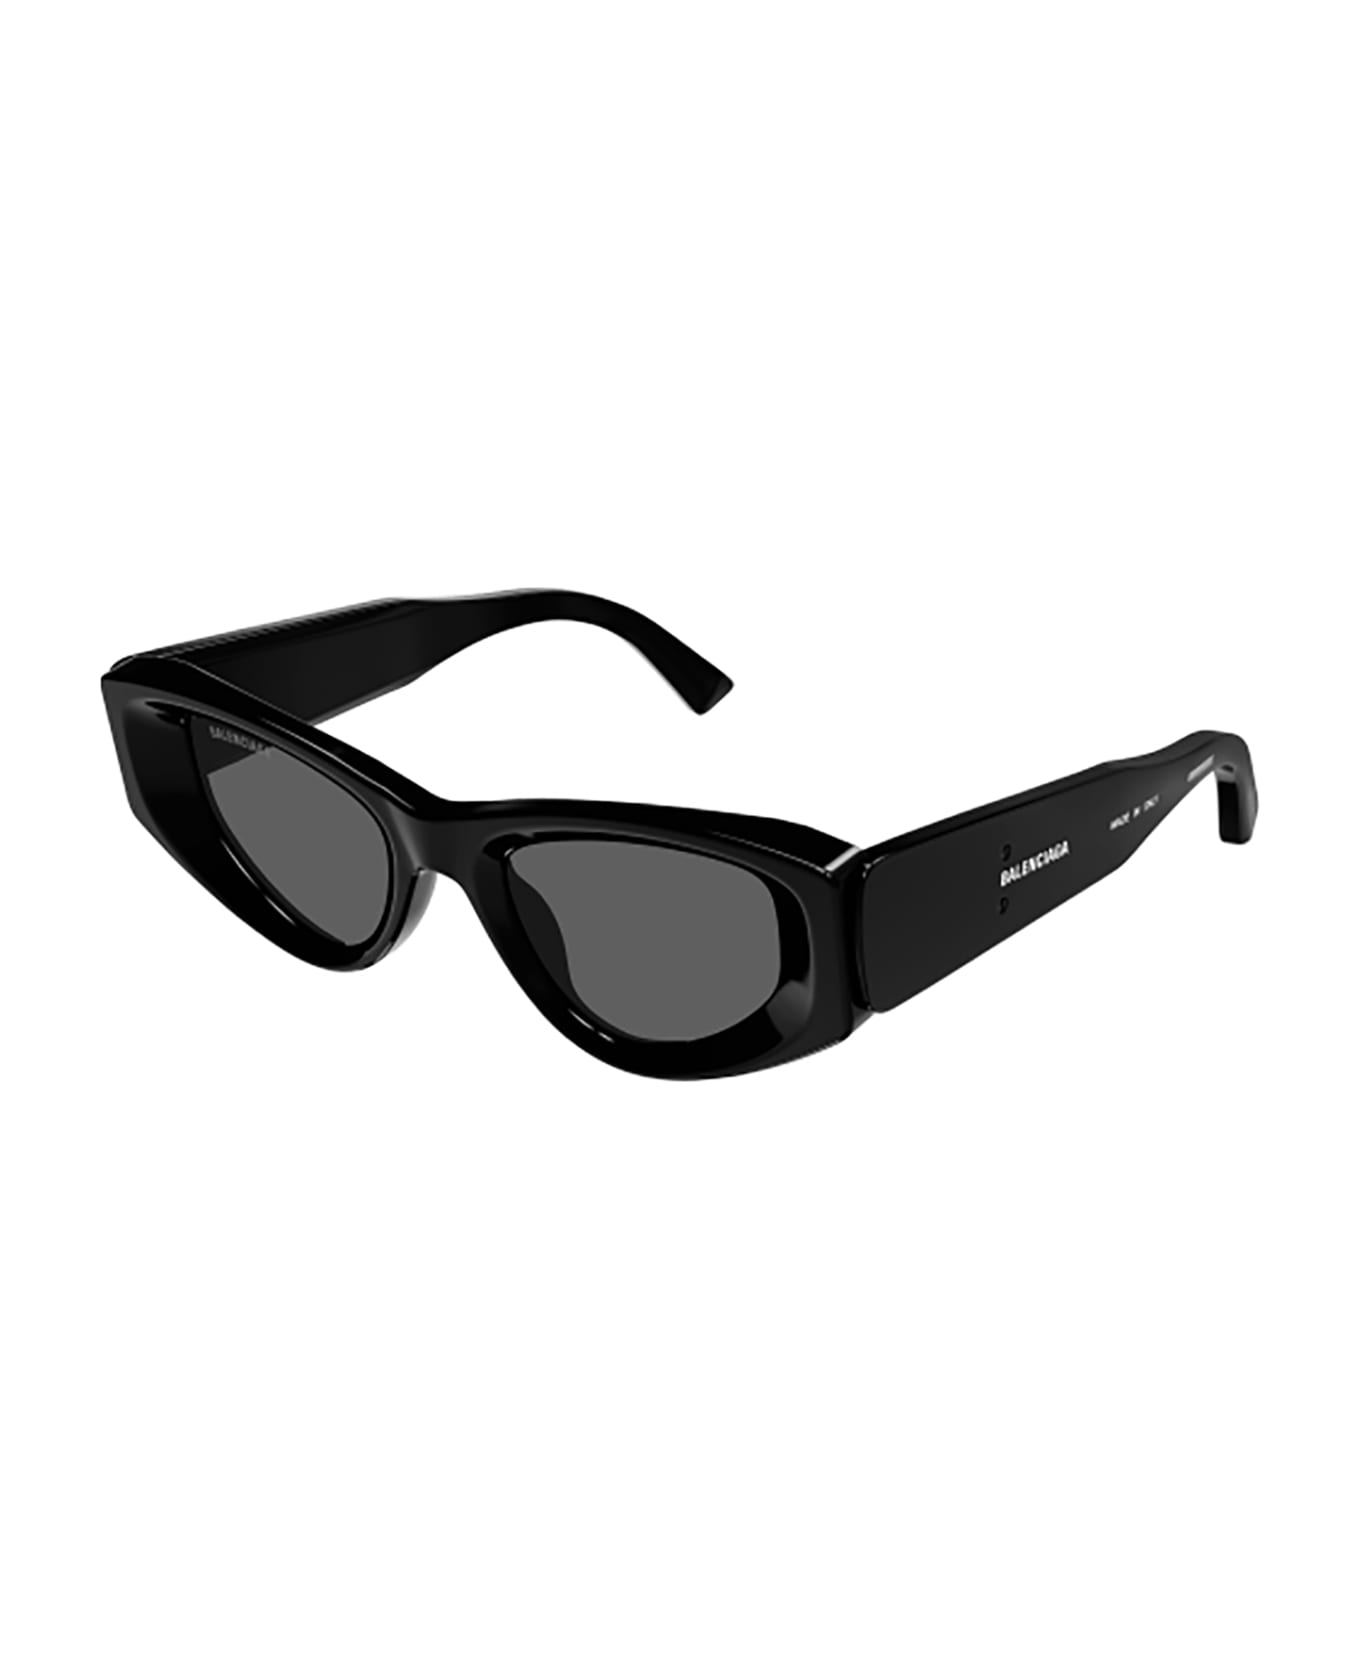 Balenciaga Eyewear 1e014i60a - Sunglasses with Web stripe